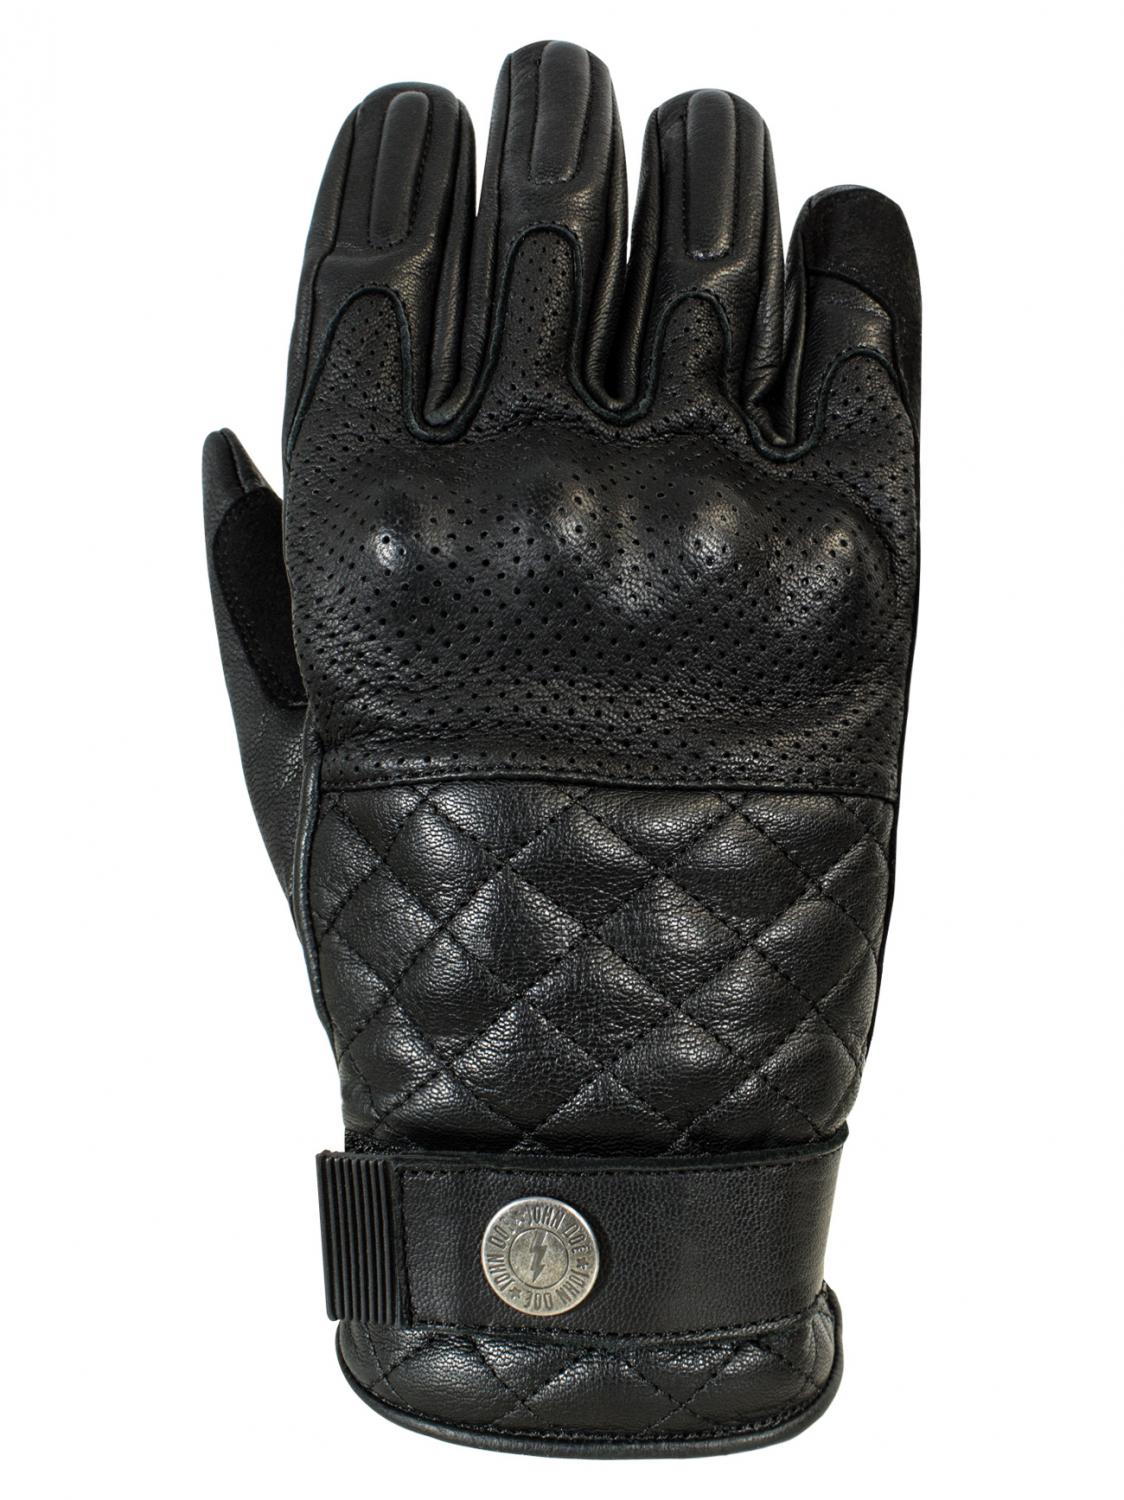 John Doe Tracker Motorcycle Gloves, Black